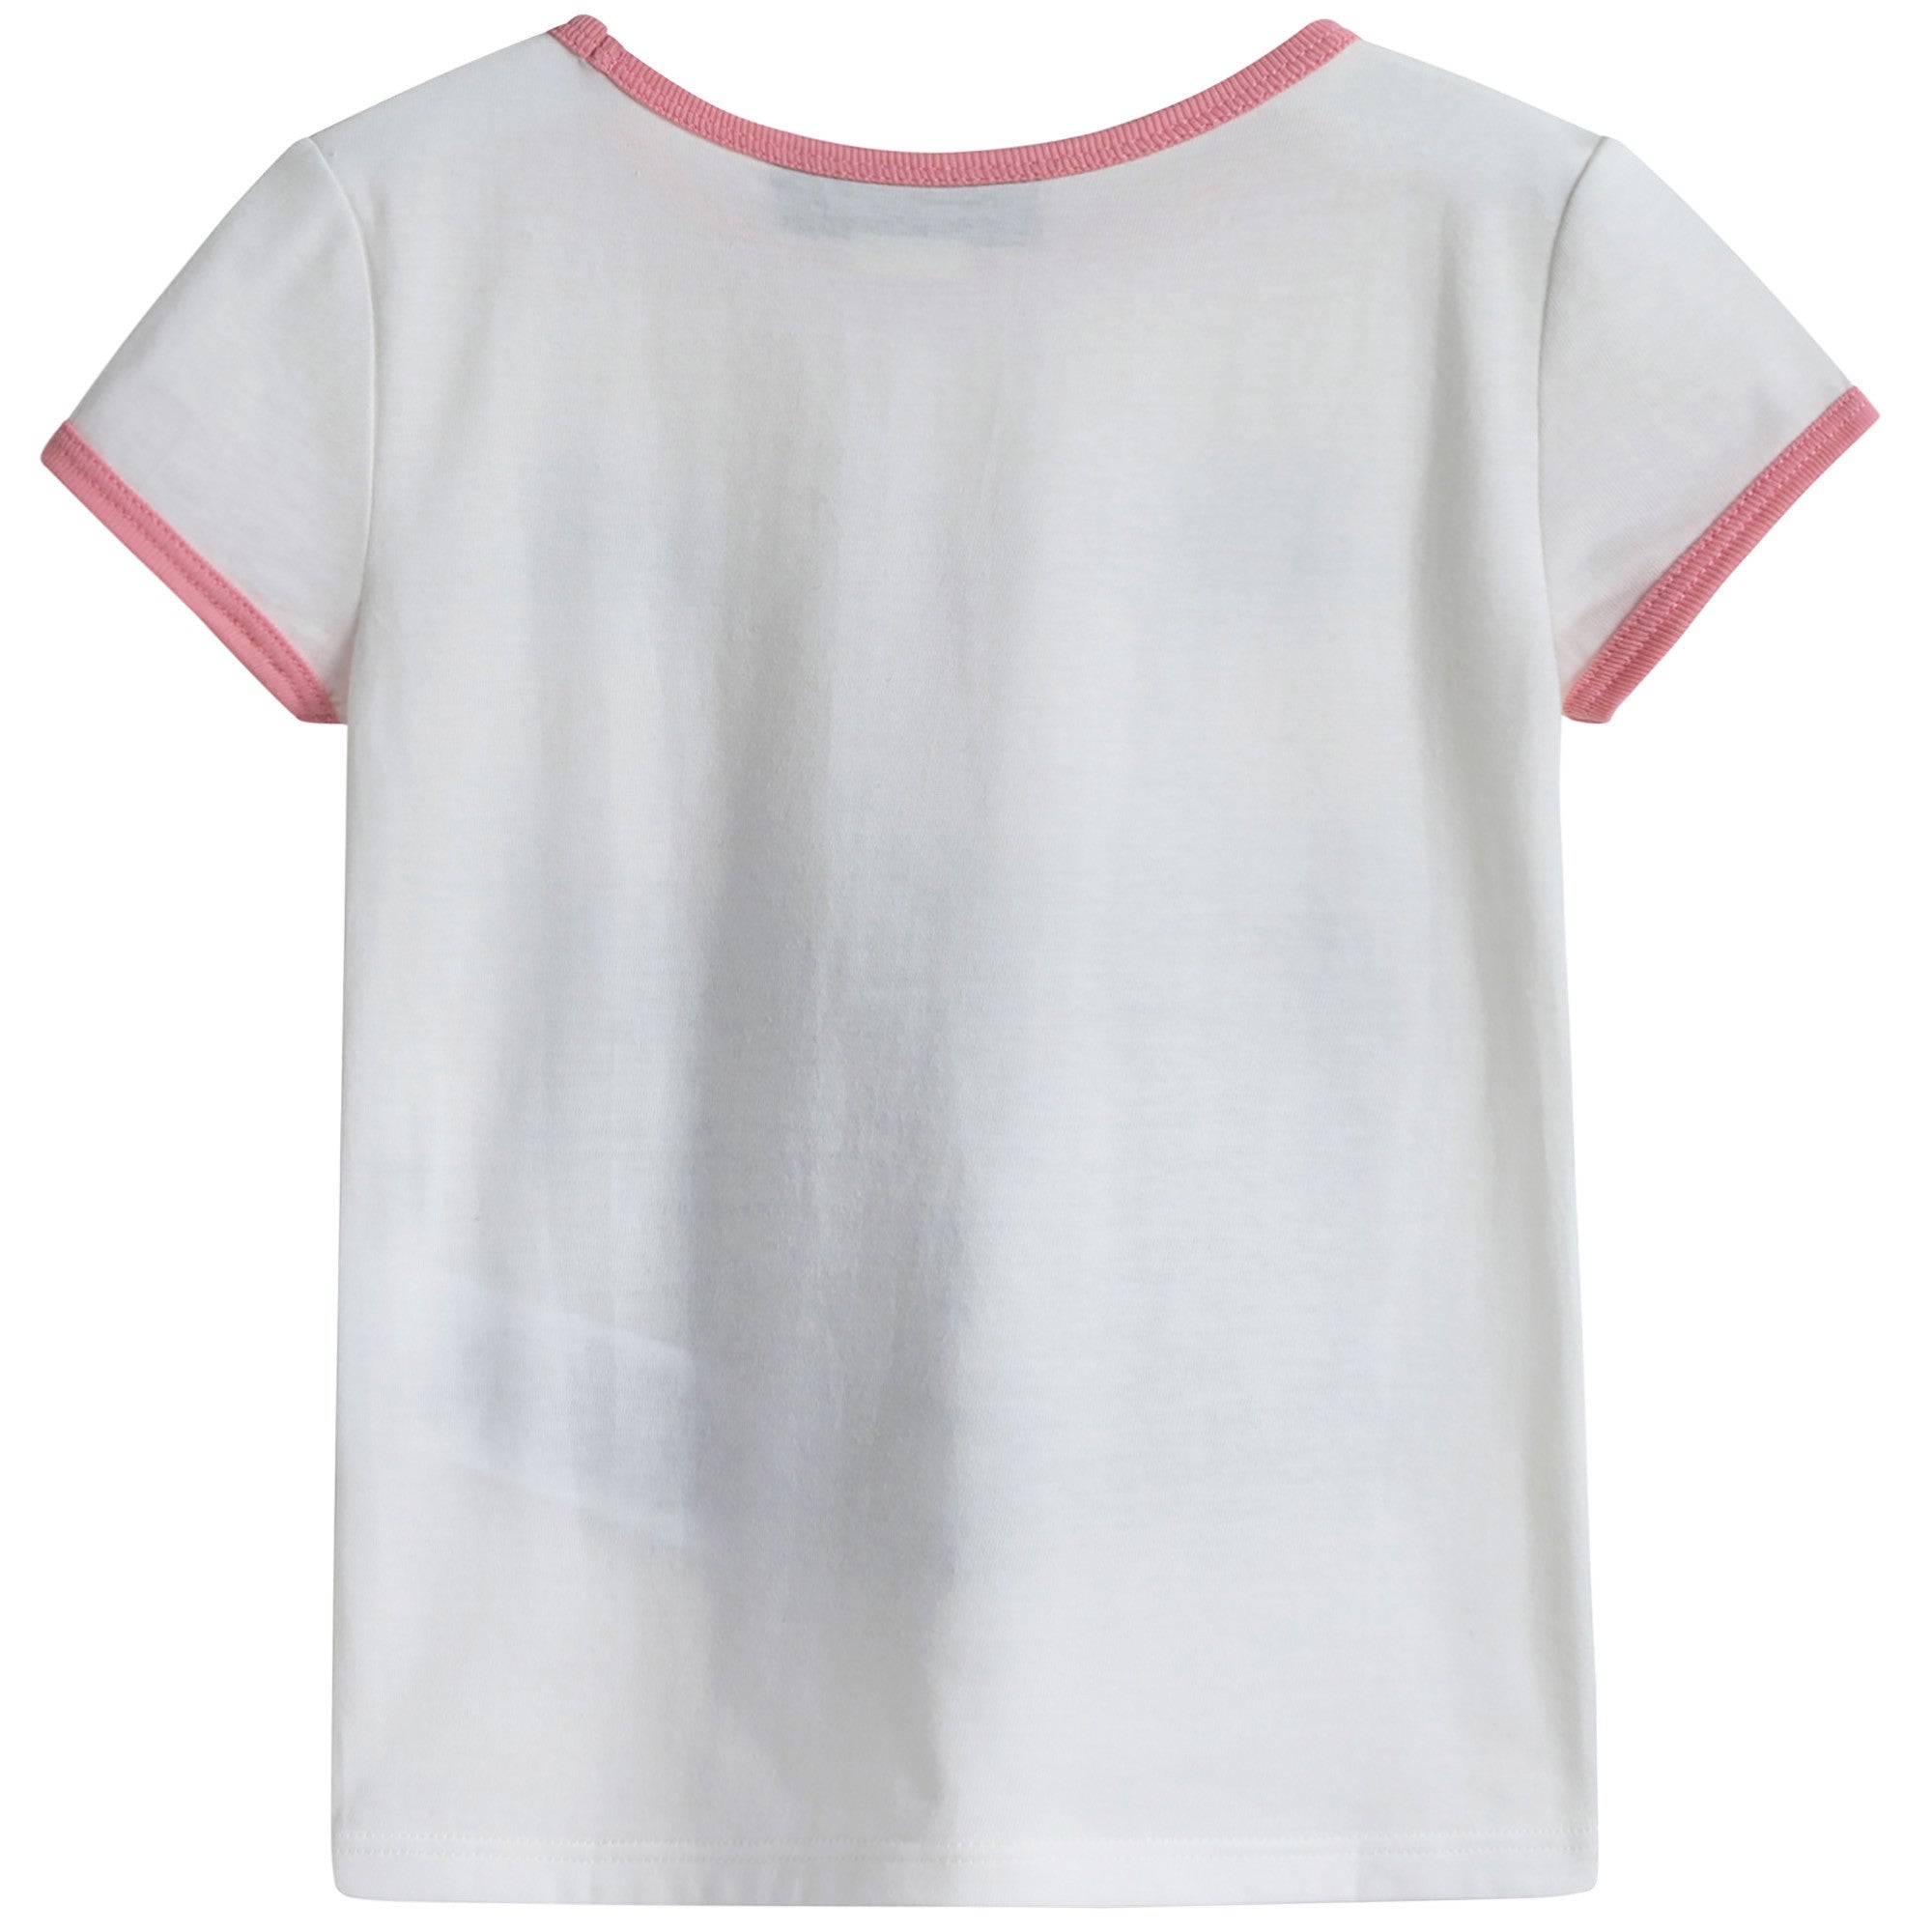 Girls White Cat Printed Trims Cotton T-Shirt